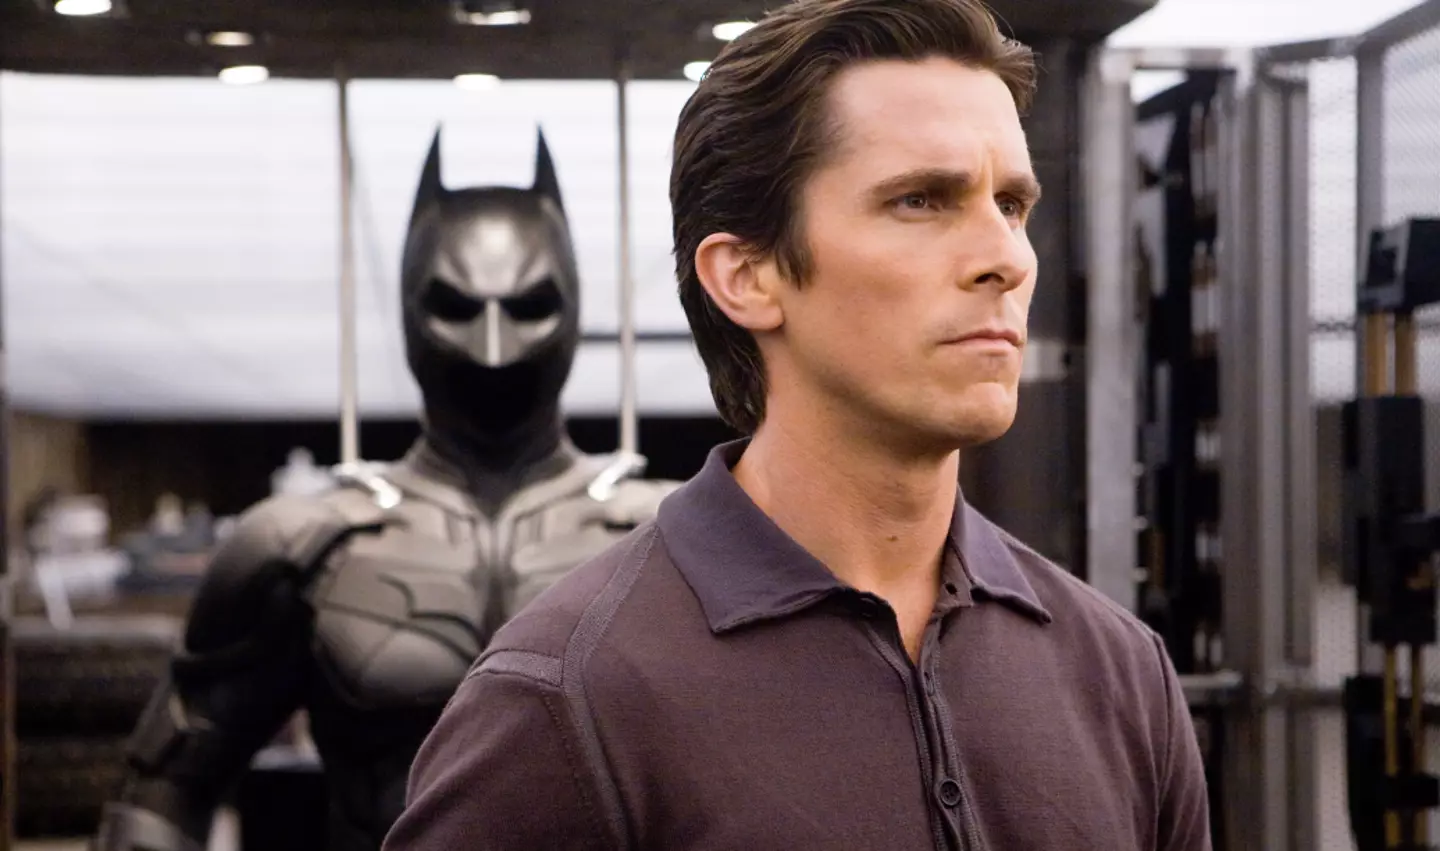 Christian Bale portrayed Batman is Christopher Nolan's franchise.